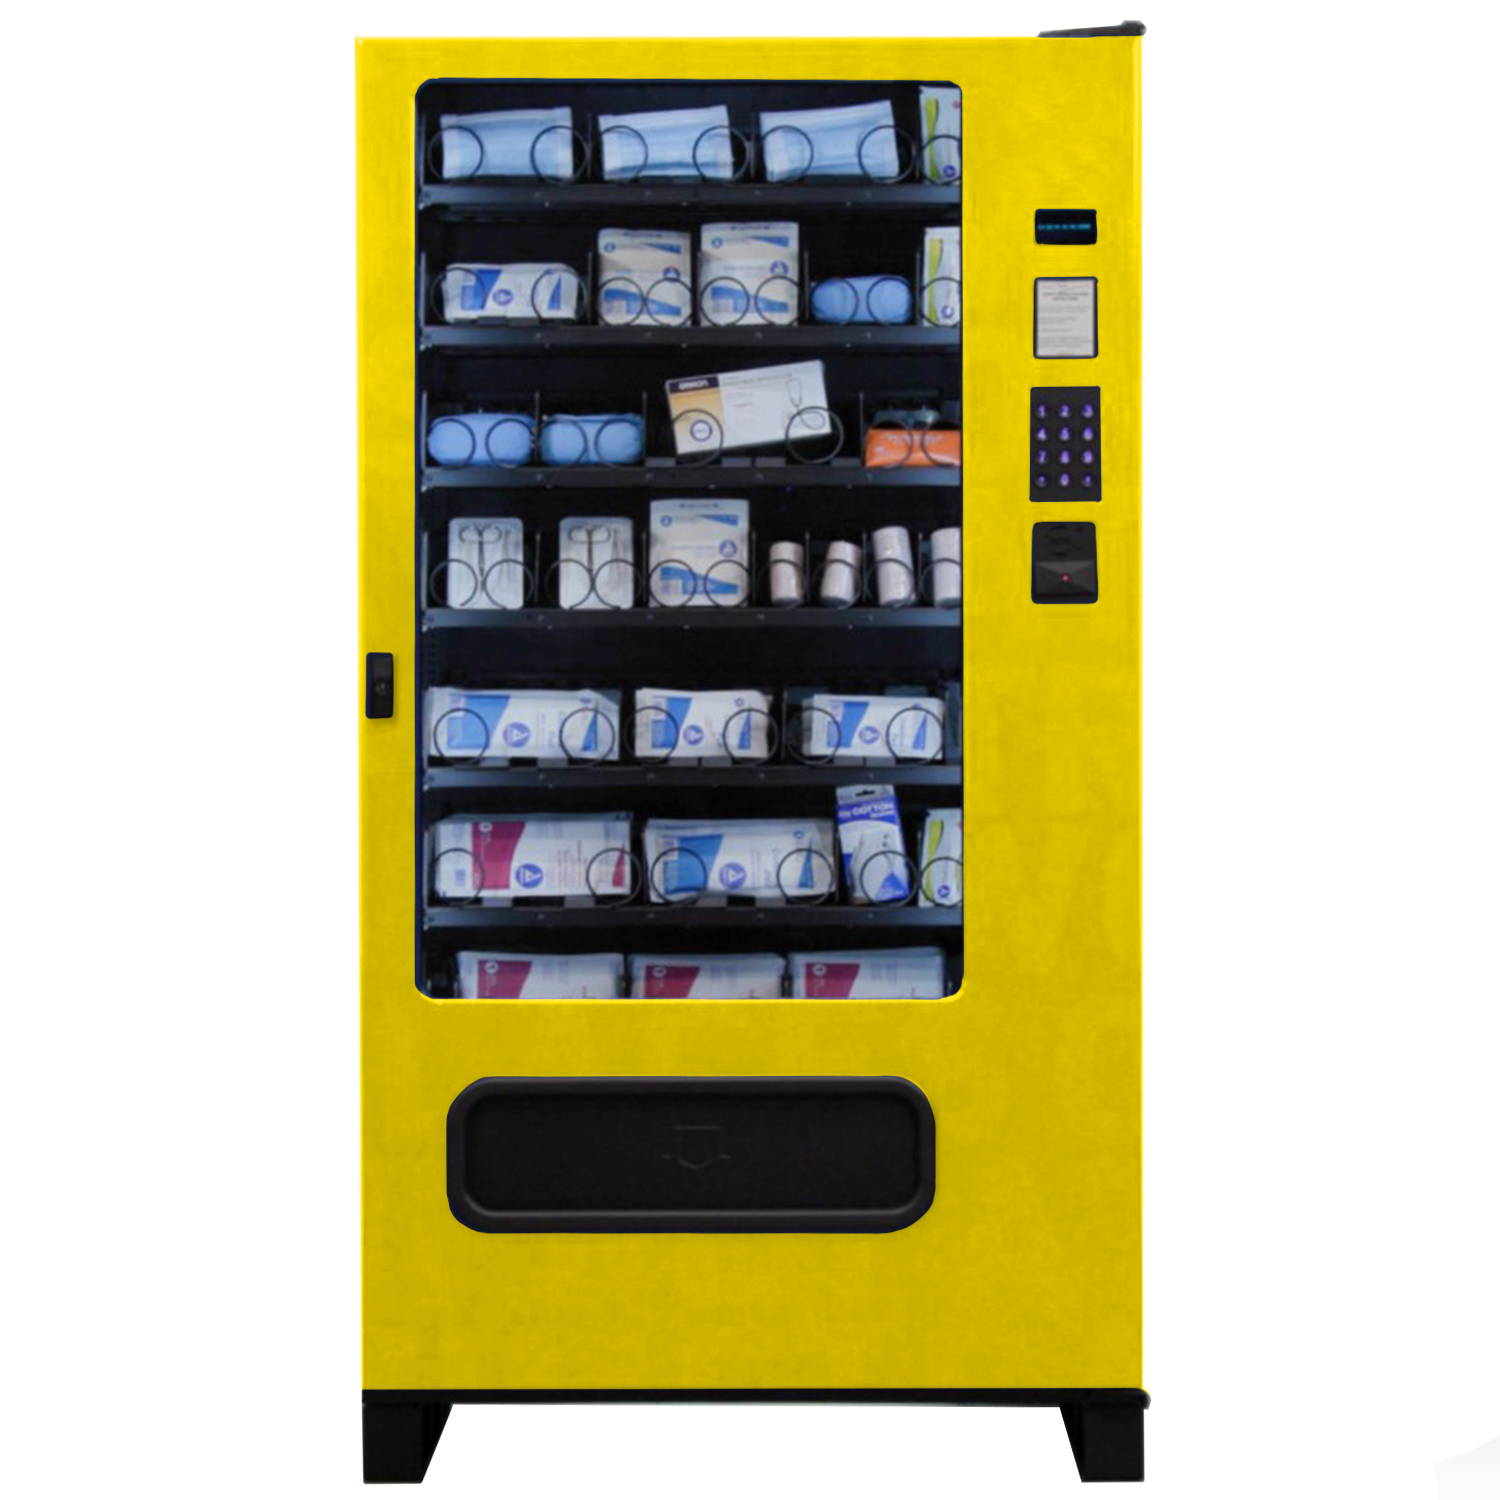 Medical supplies vending machine.